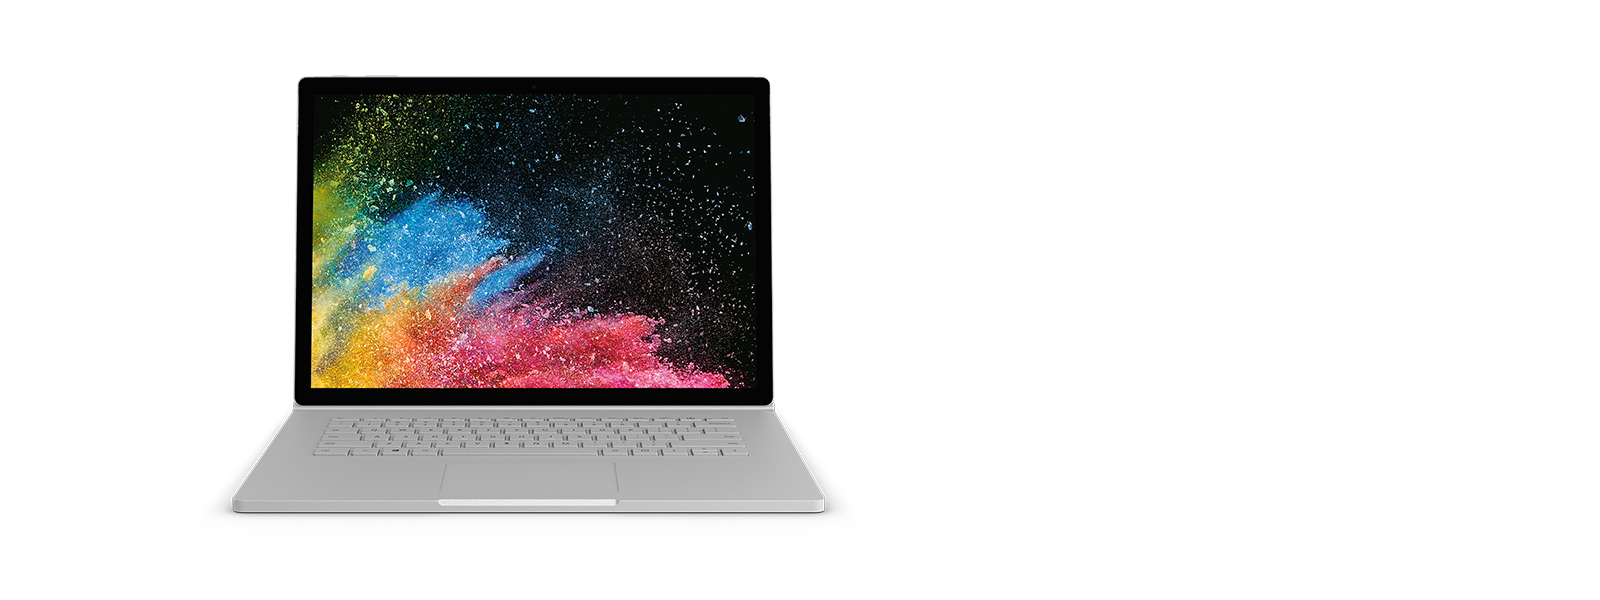 Microsoft Surface Book 2 Specs Powerhouse Performance Surface